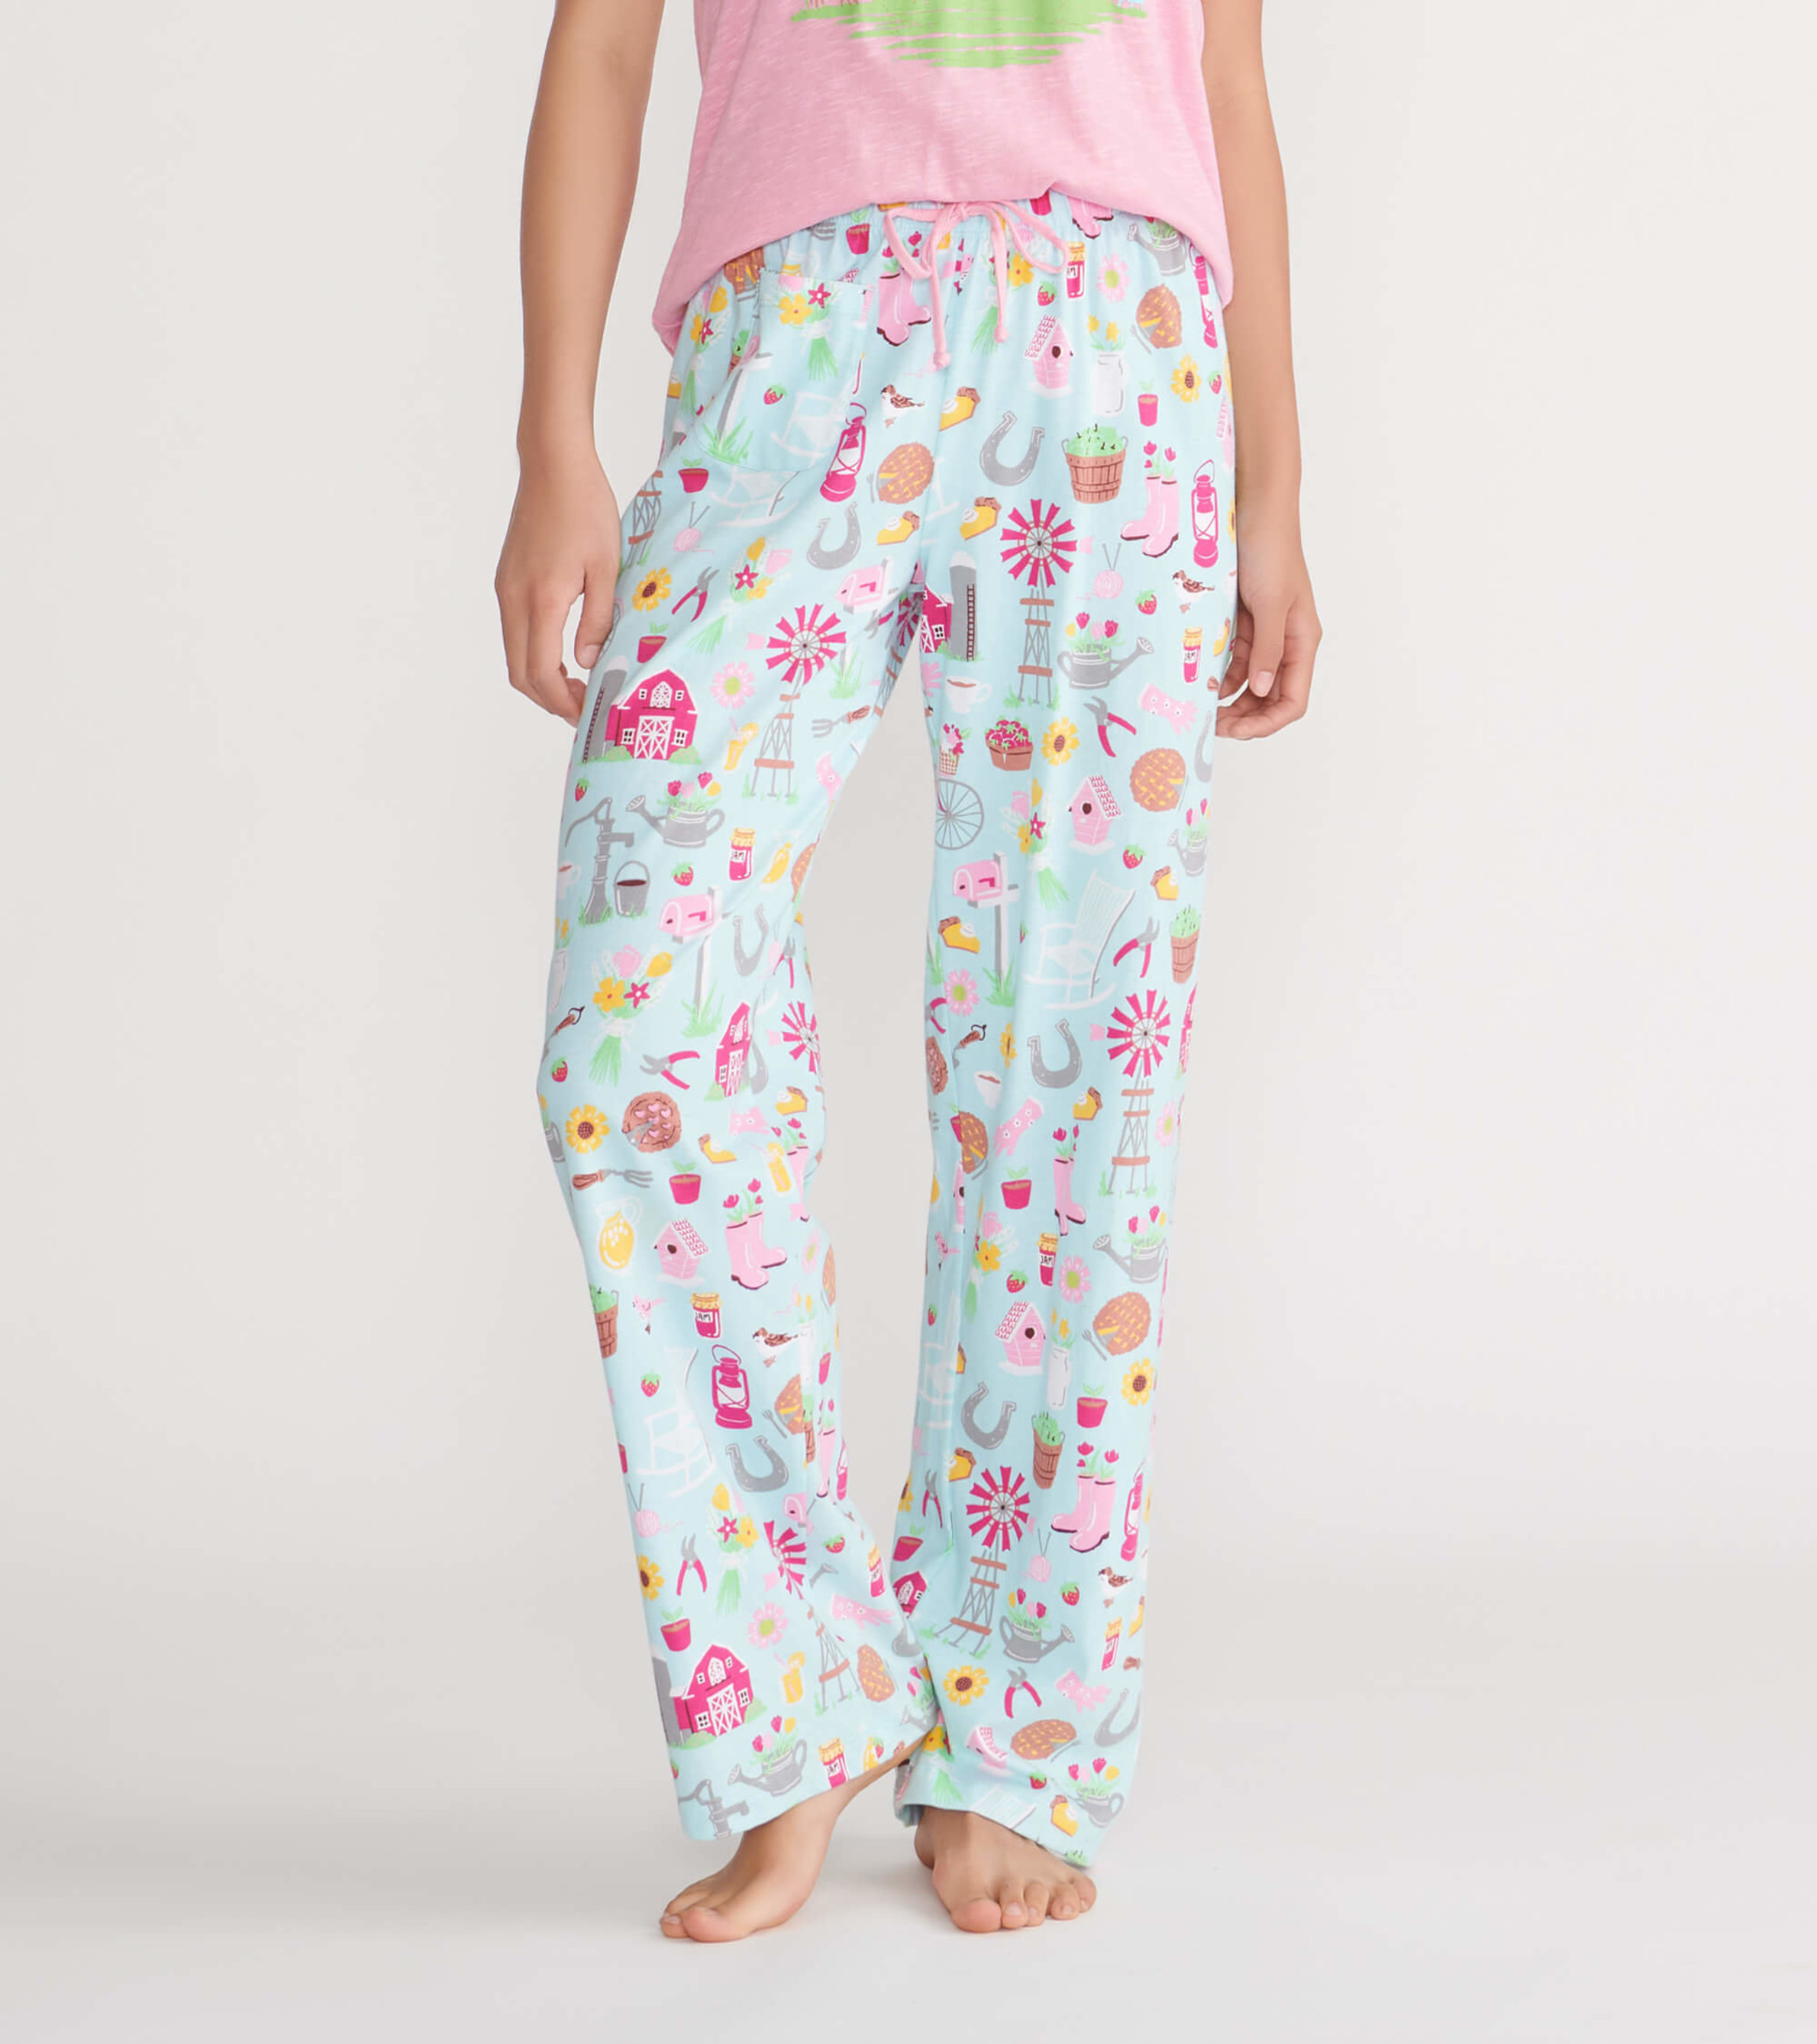 Pajama Pants - Dark blue/white plaid - Ladies | H&M US